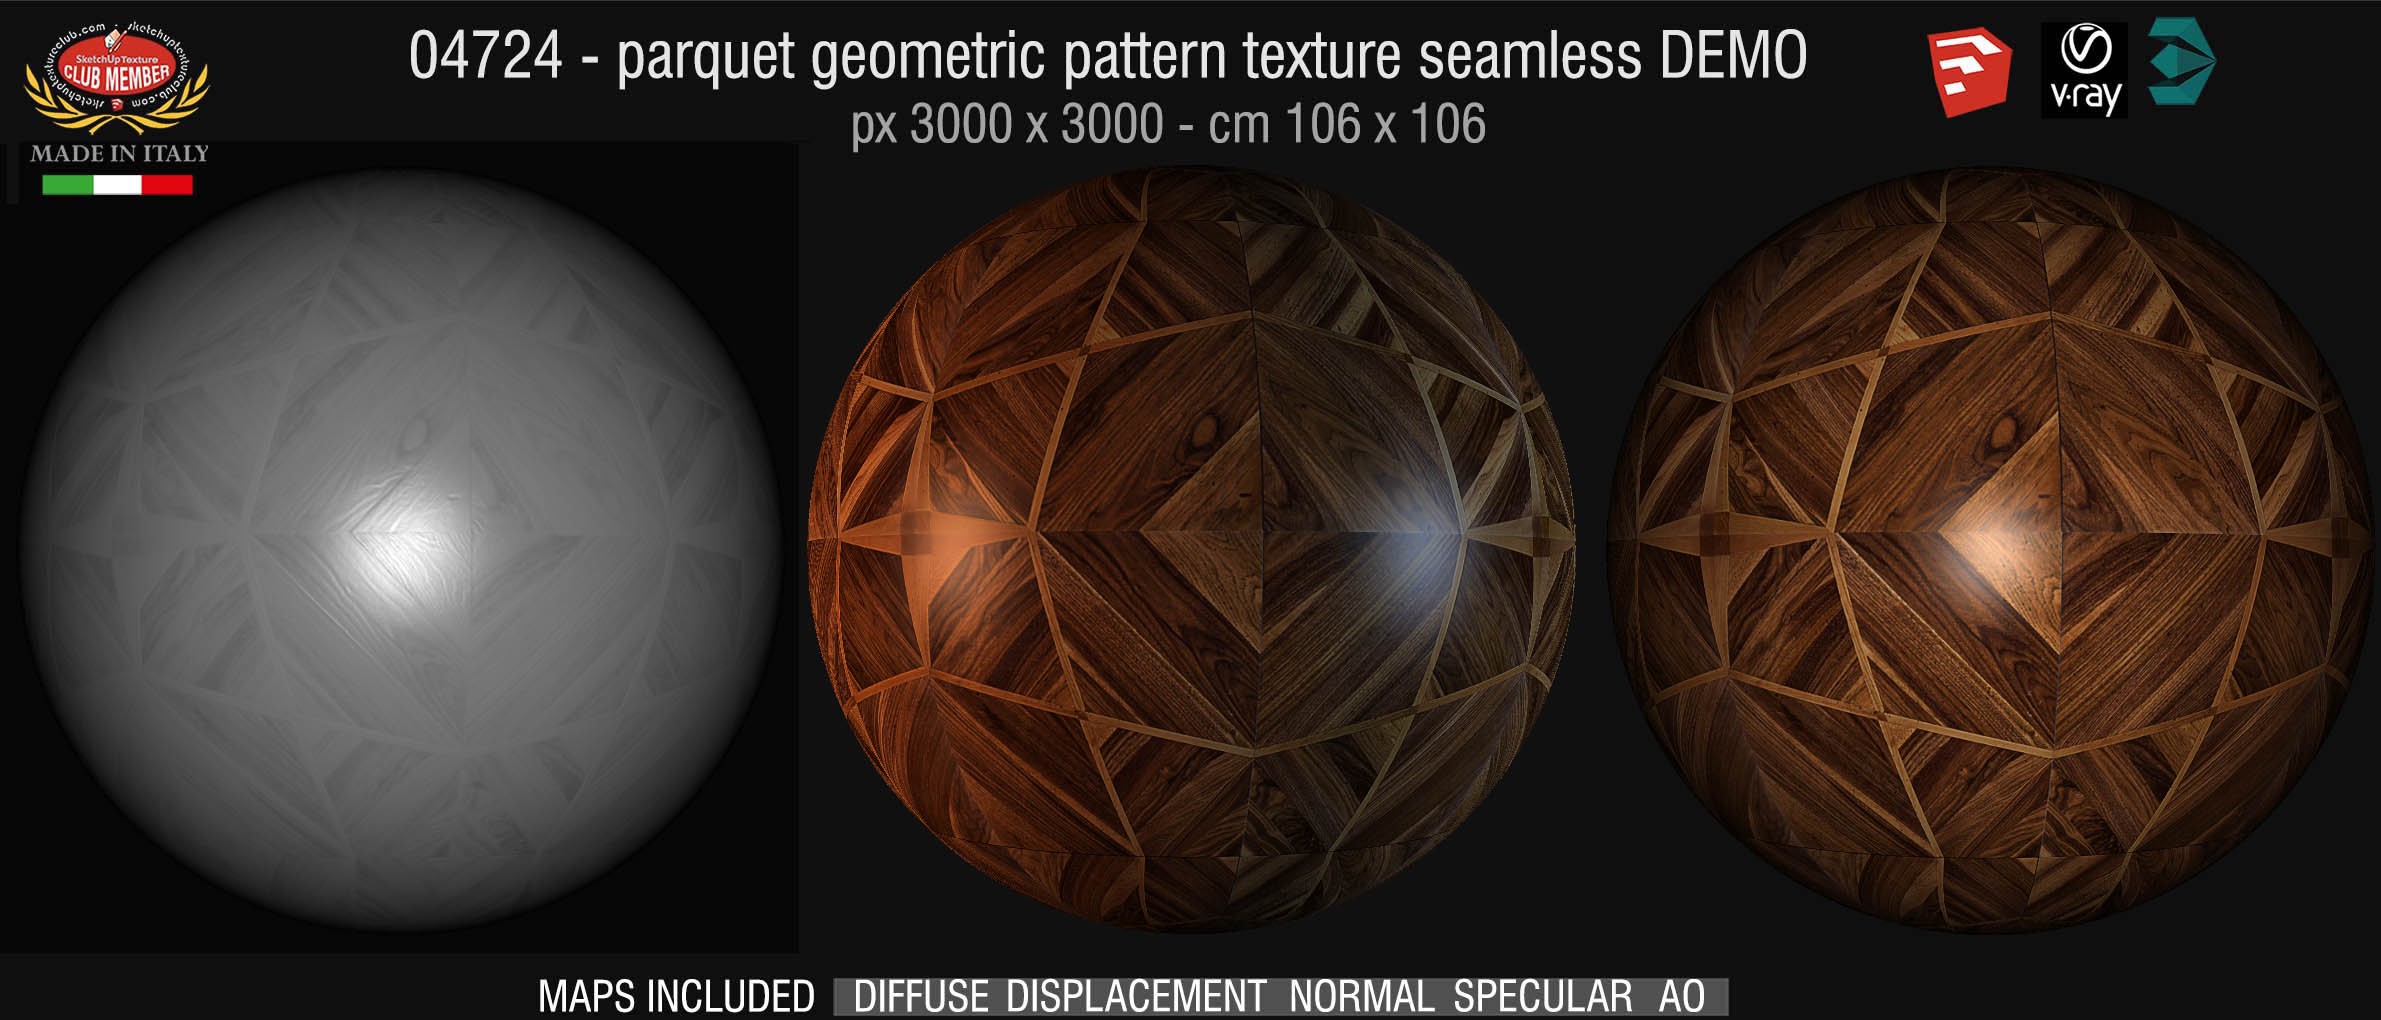 04724 HR Parquet geometric pattern texture seamless + maps DEMO